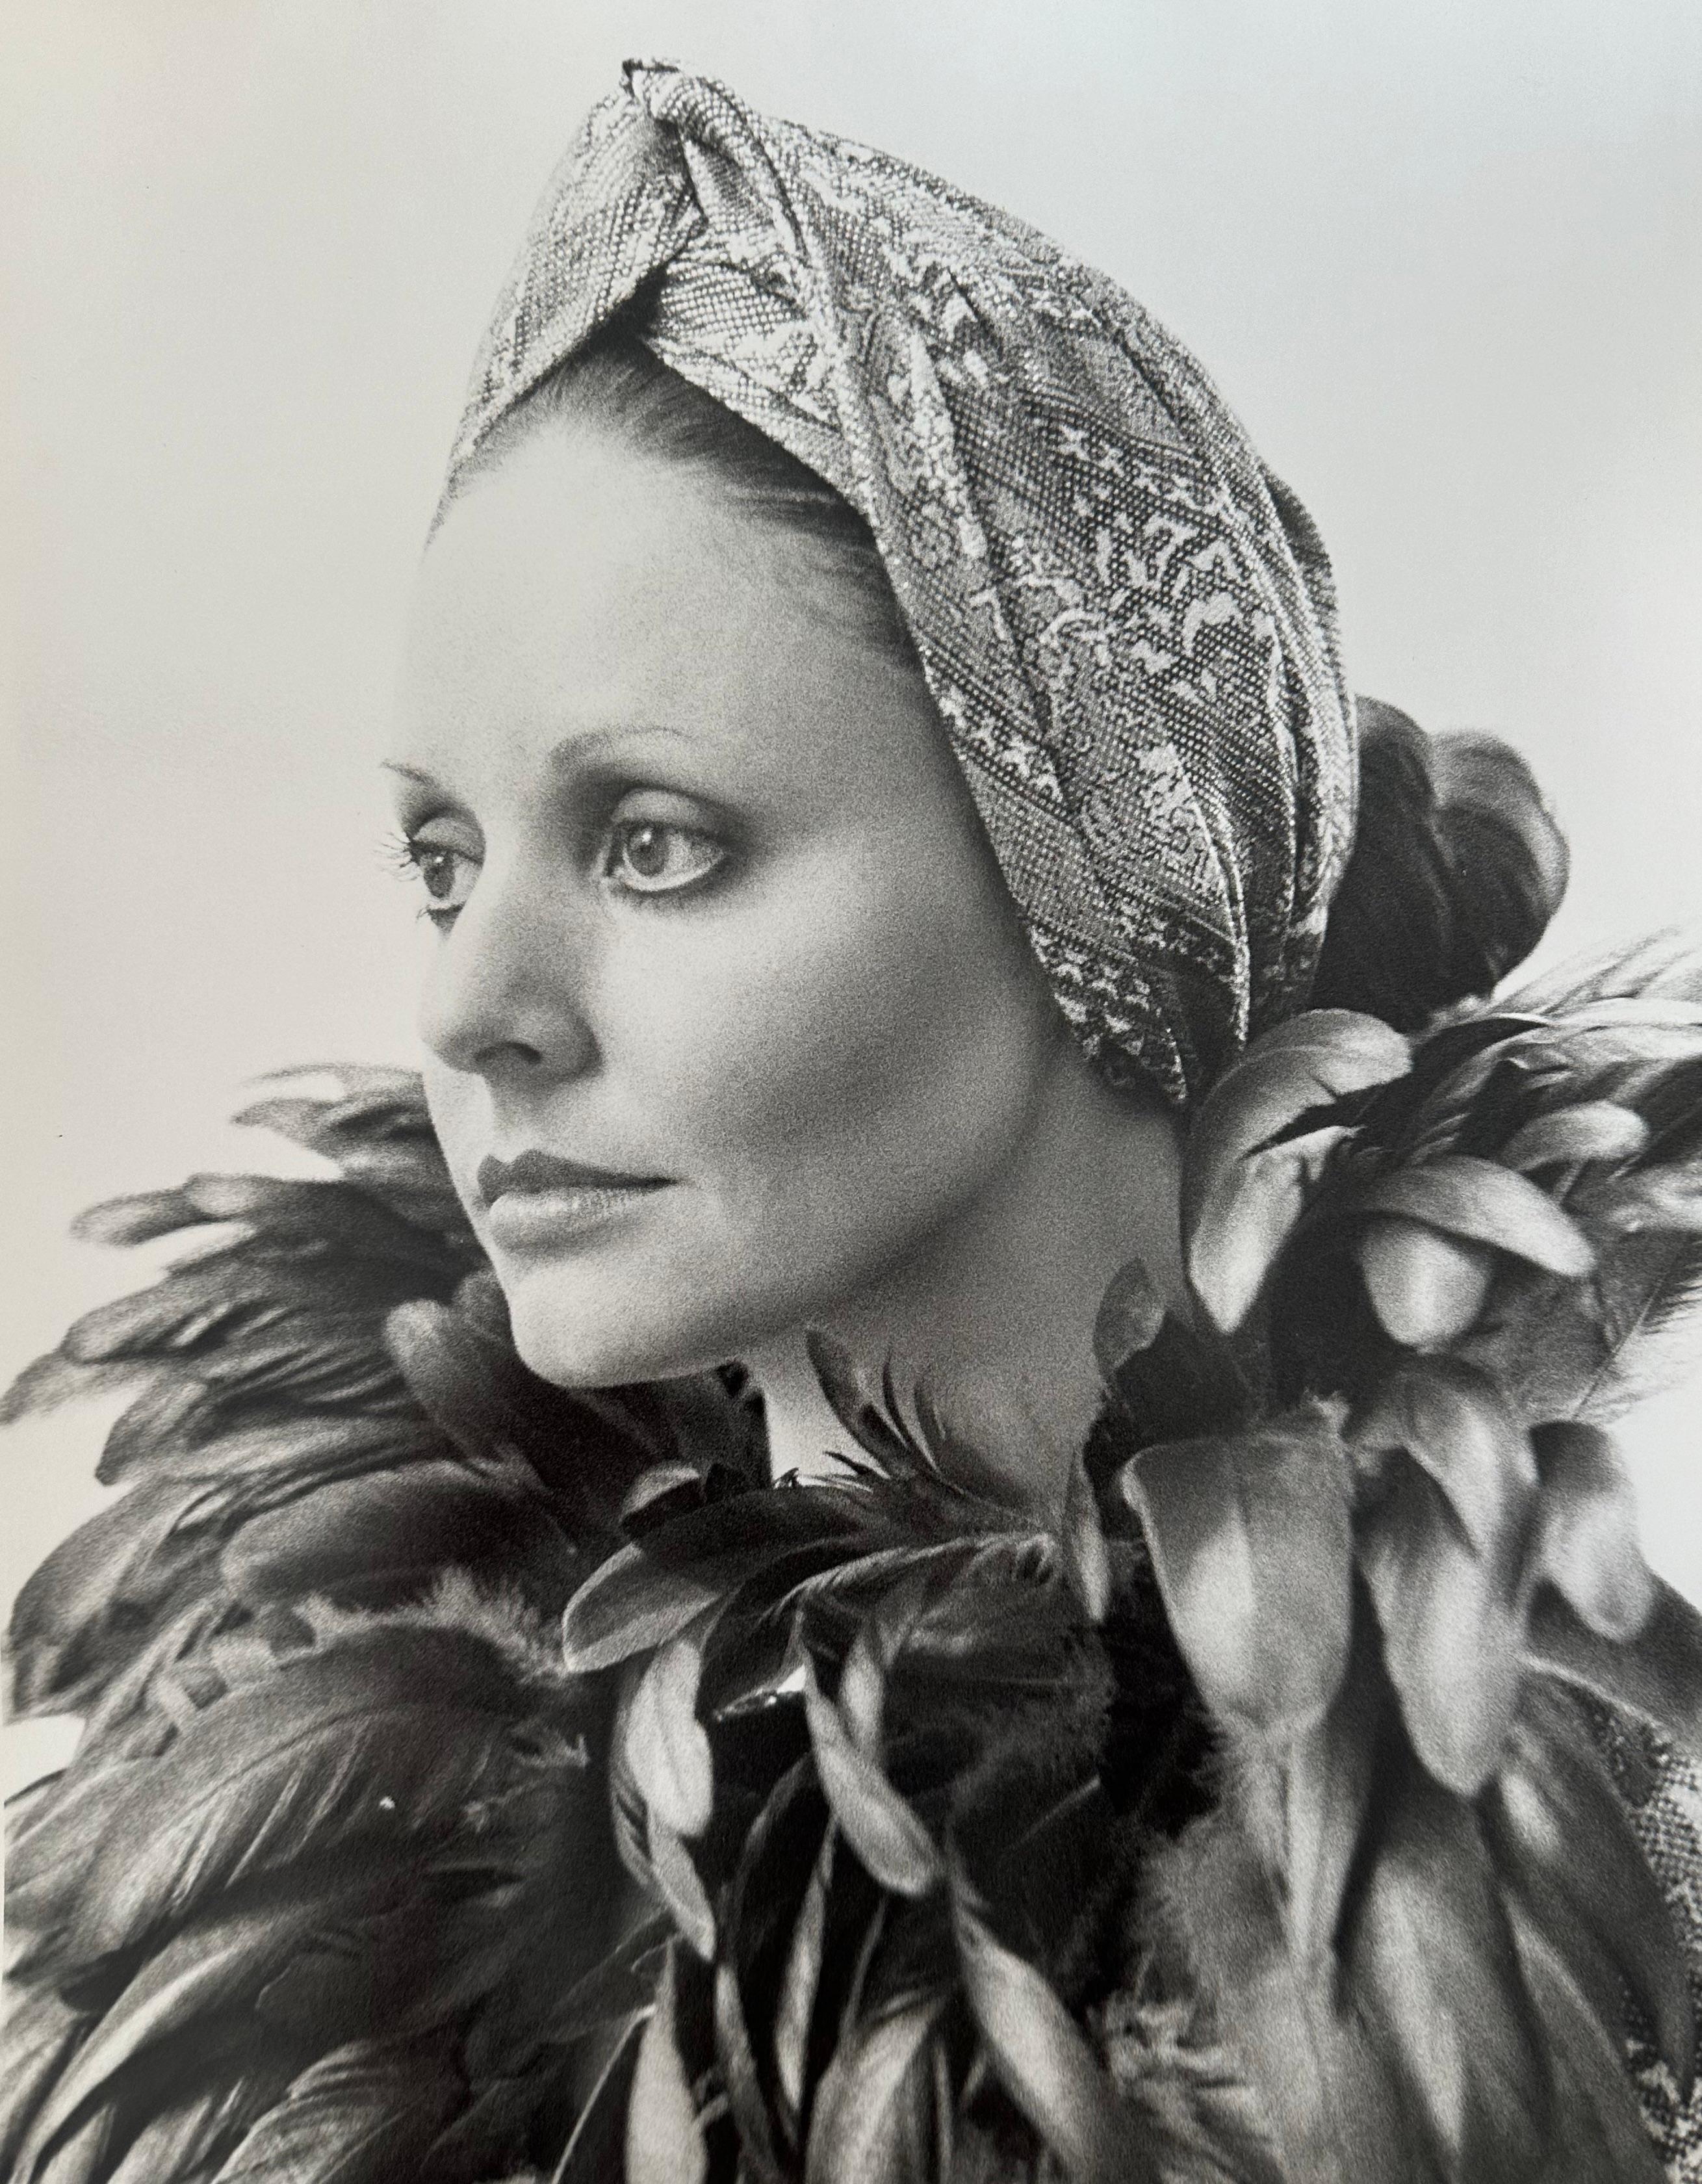 Kenn Duncan Portrait Photograph - 1970s Fashion editorial photo Turban and Feathers